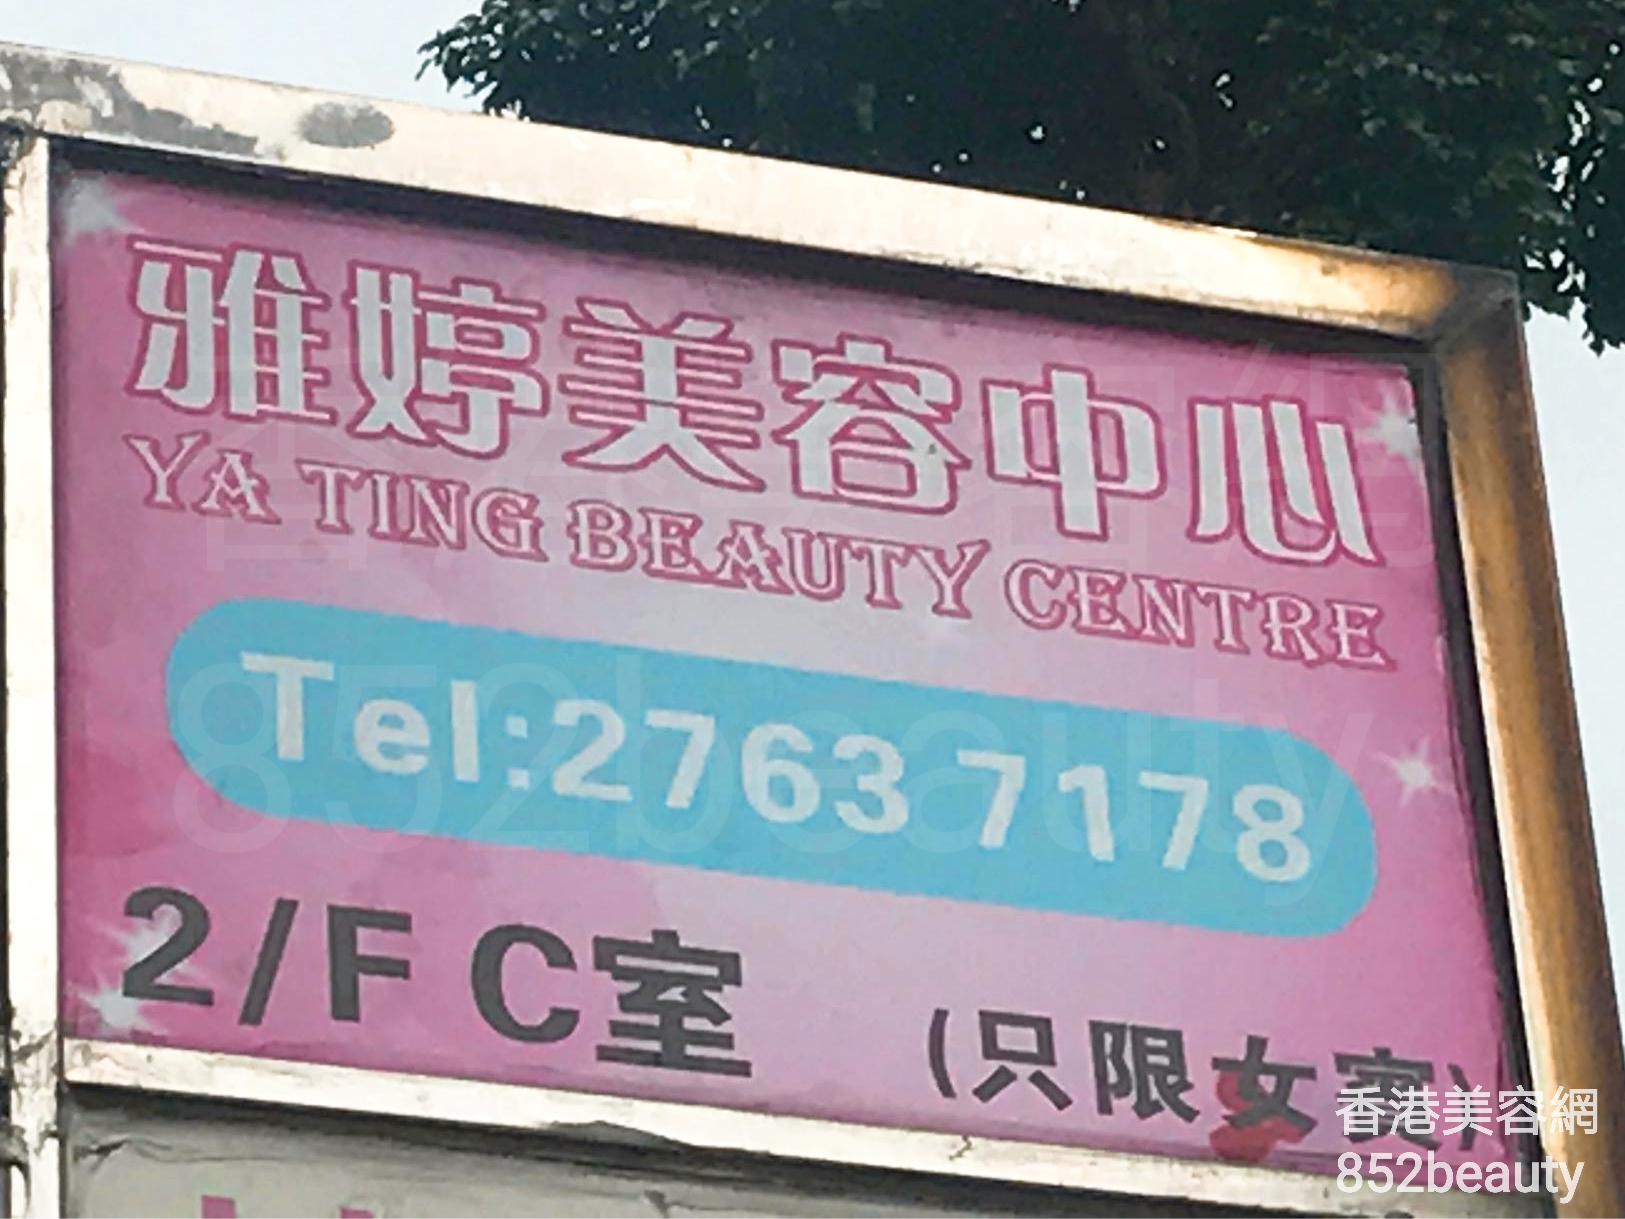 Hand and foot care: 雅婷美容中心 Ya Ting Beauty Centre